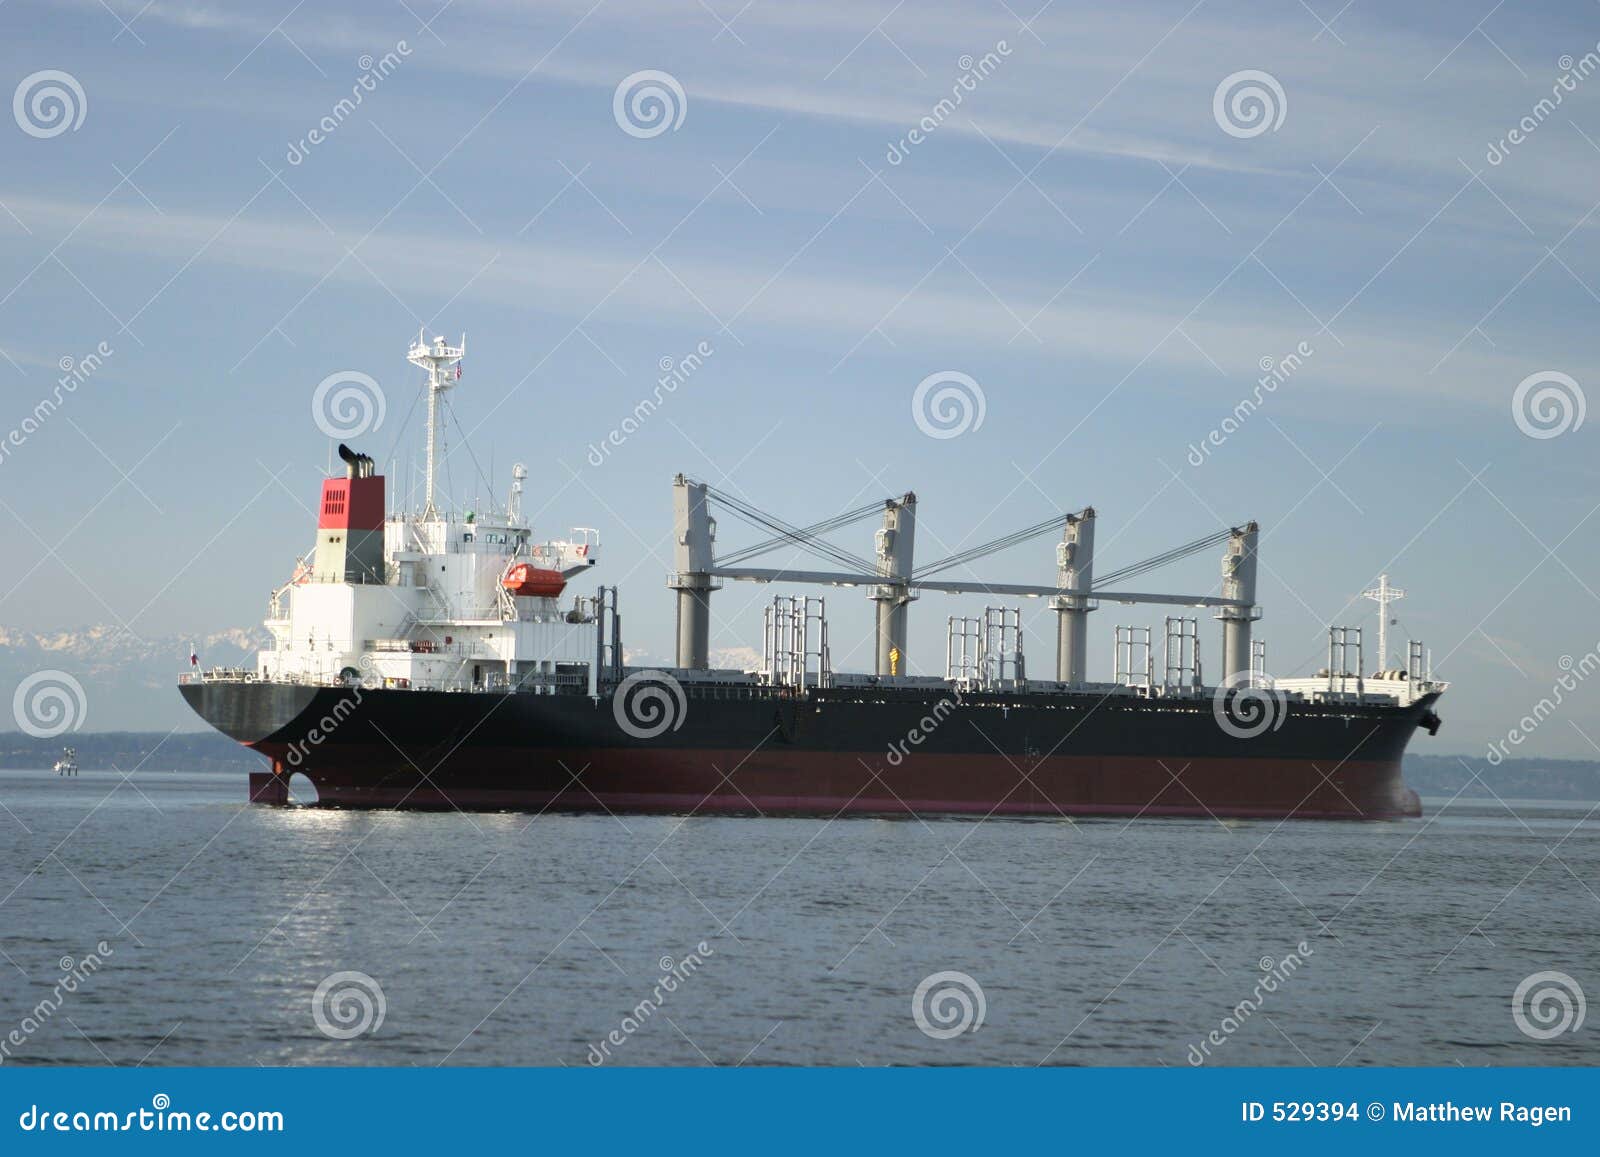 cargo freighter